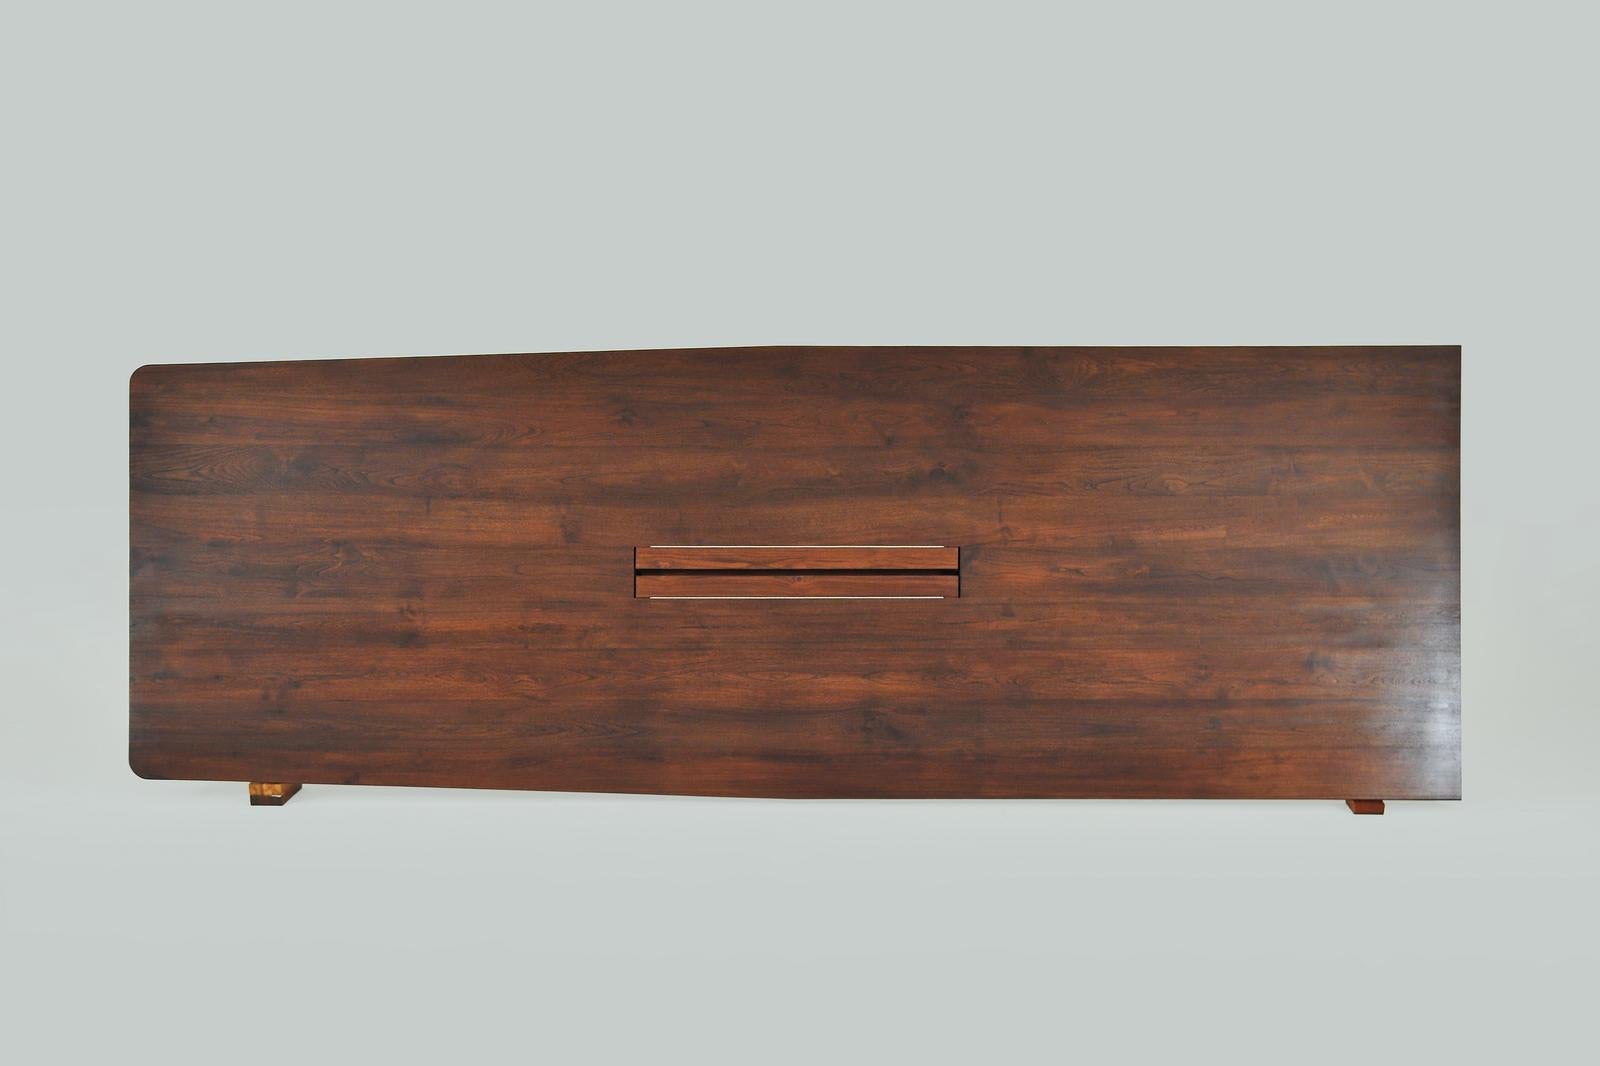 Bespoke Board Room Table, Reclaimed Wood, Sand Cast Brass Base, by P. Tendercool For Sale 6